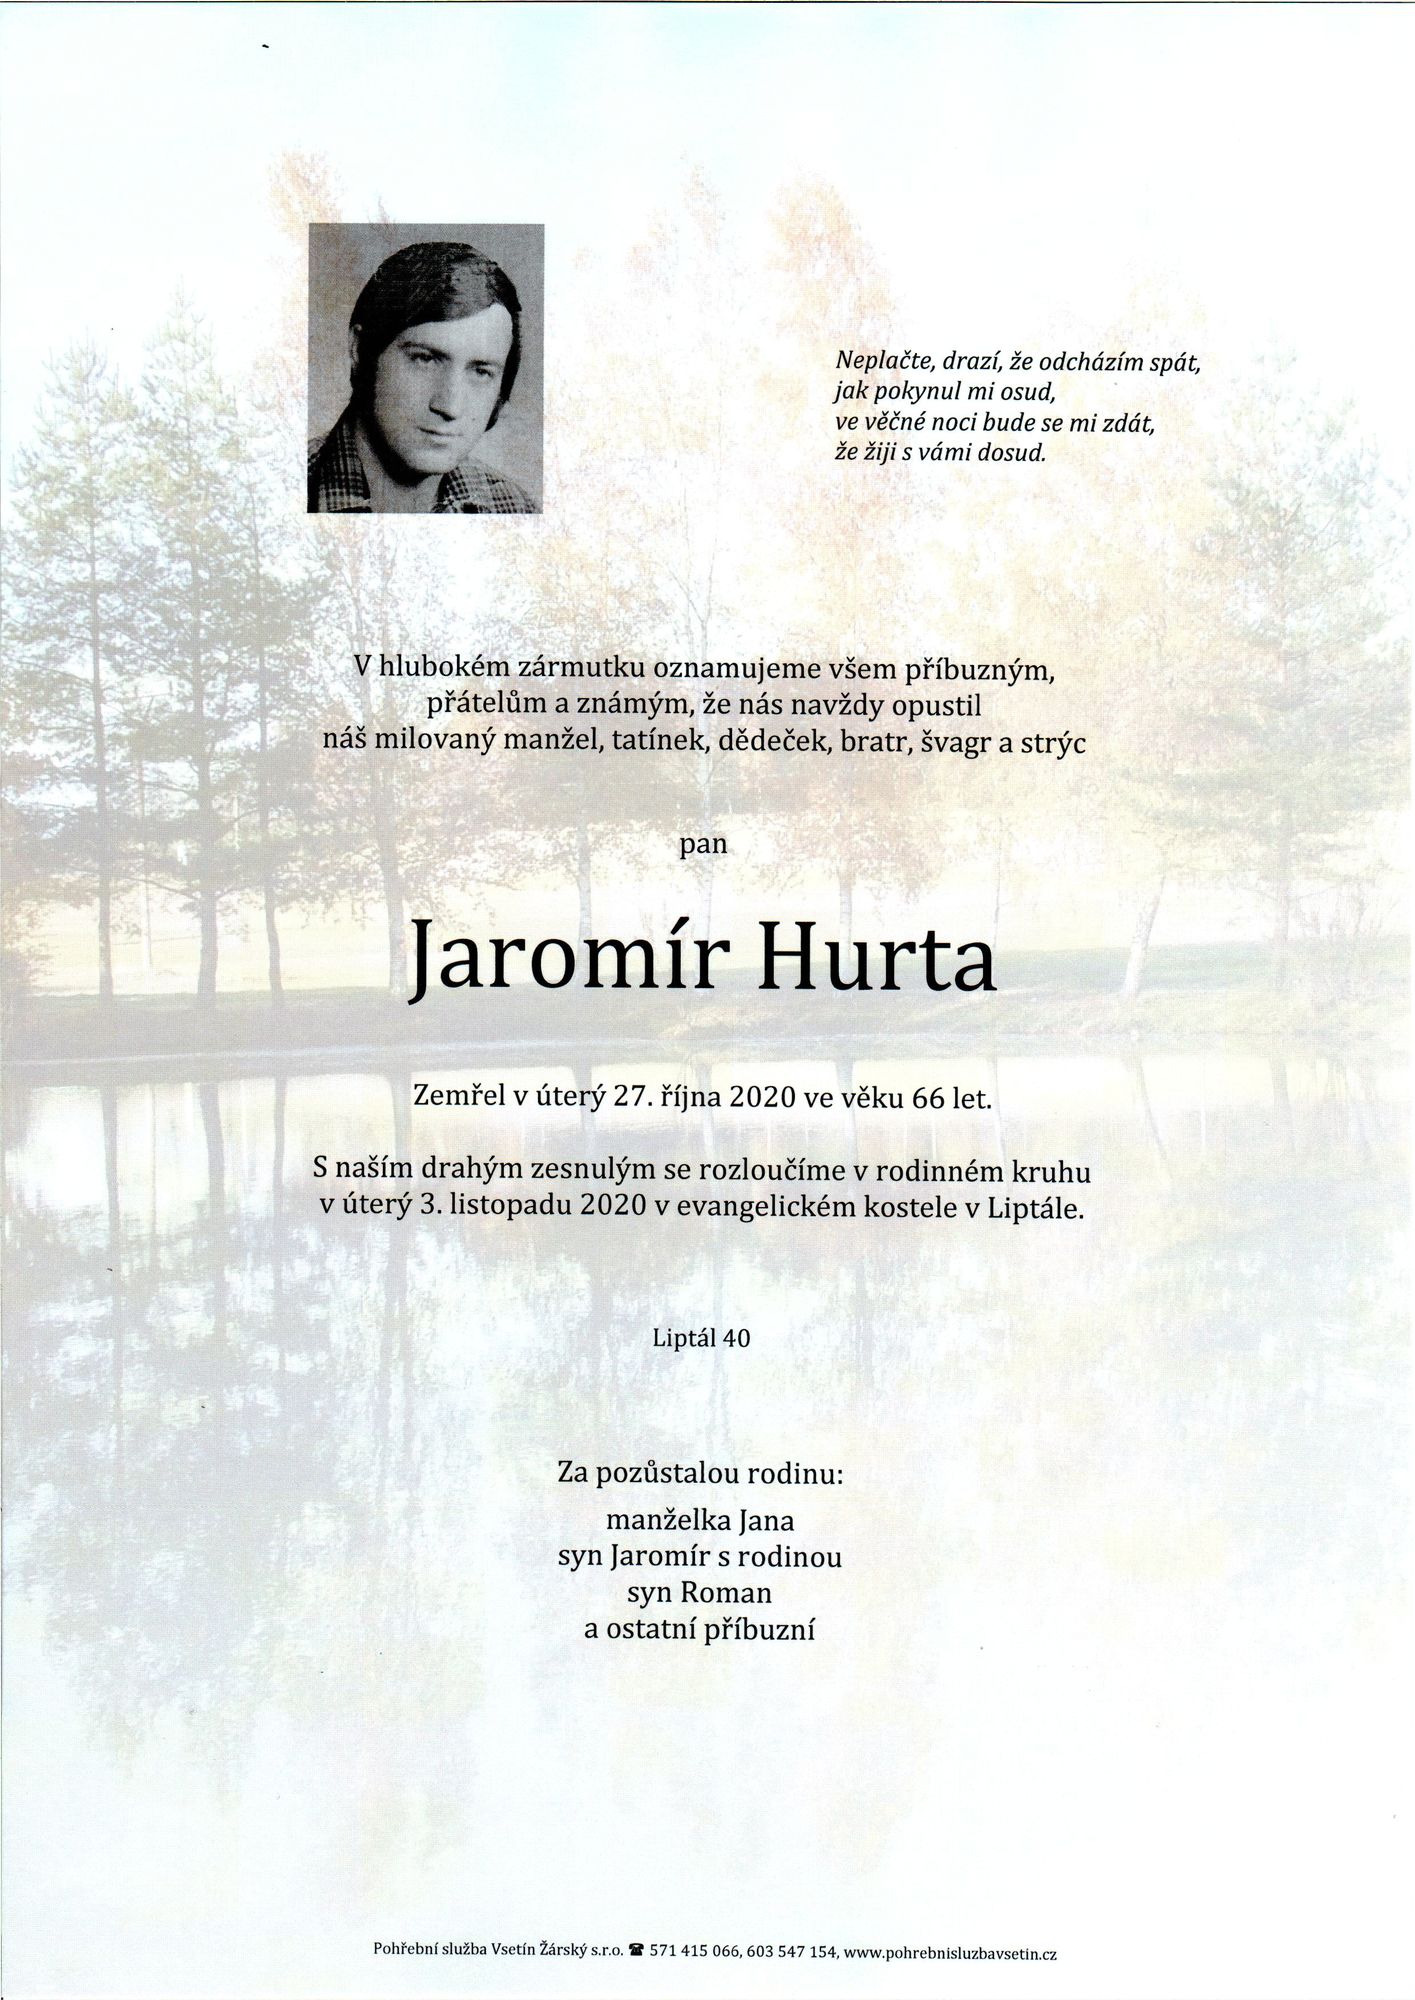 Jaromír Hurta